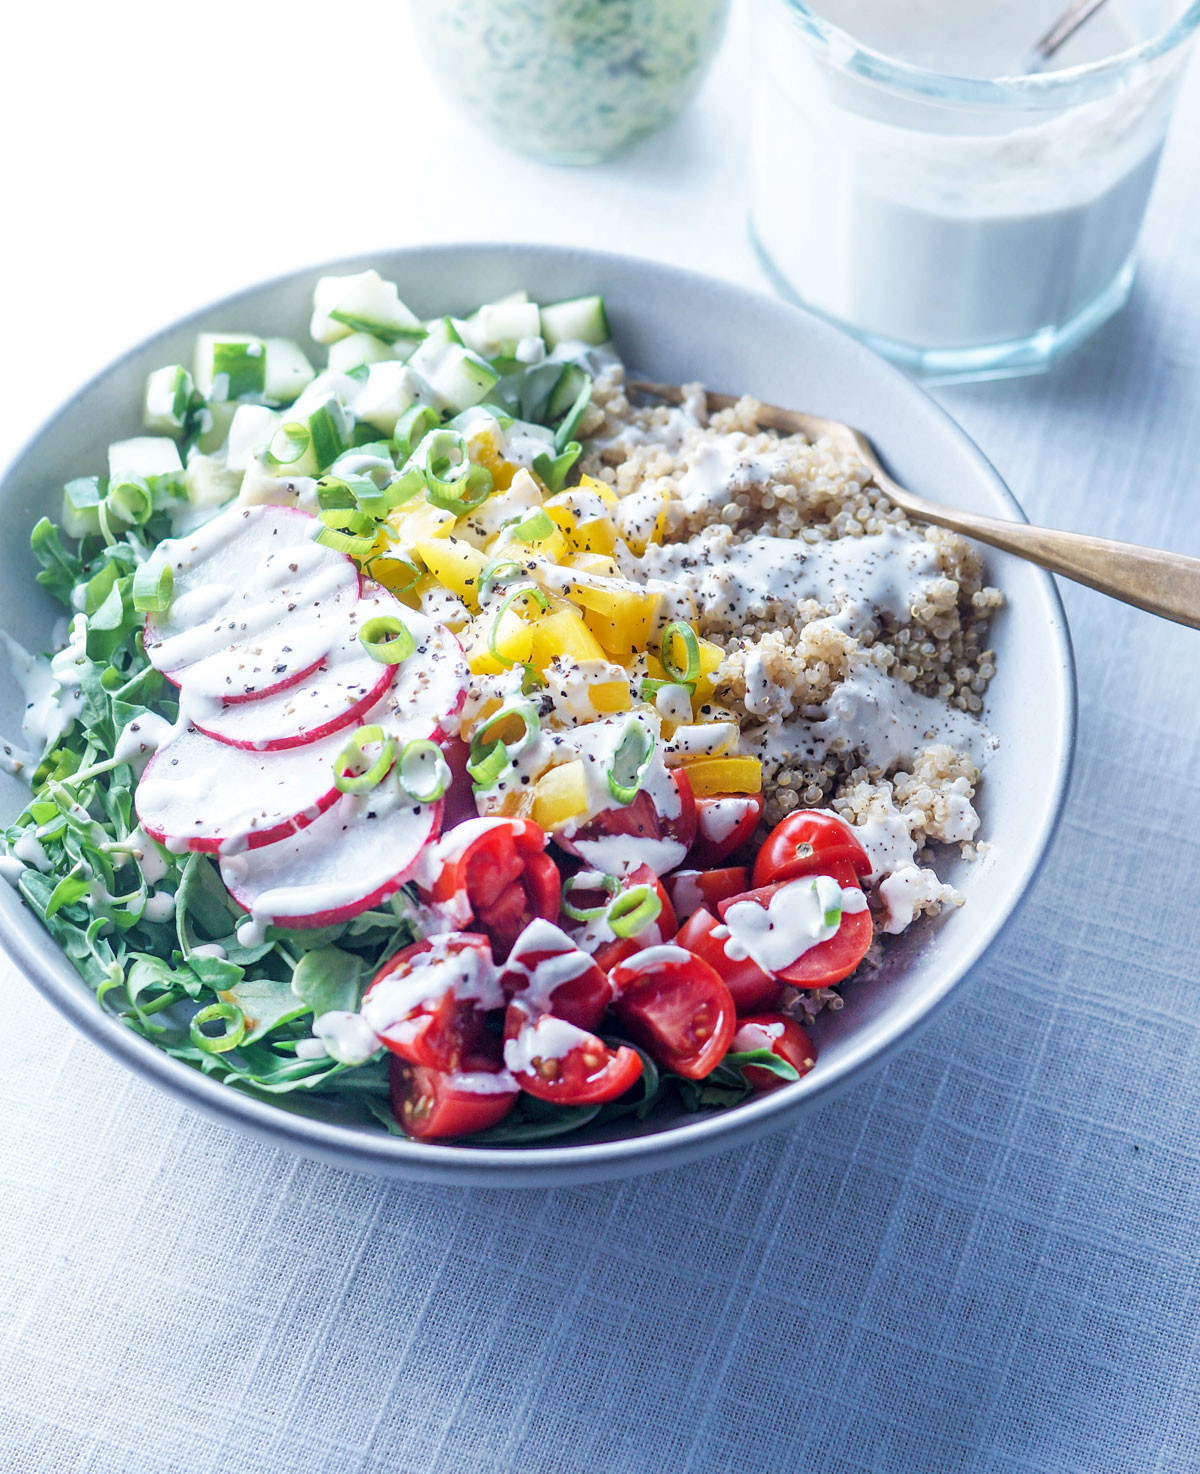 Make Ahead Healthy Lunches
 Make Ahead Vegan Lunch Bowls